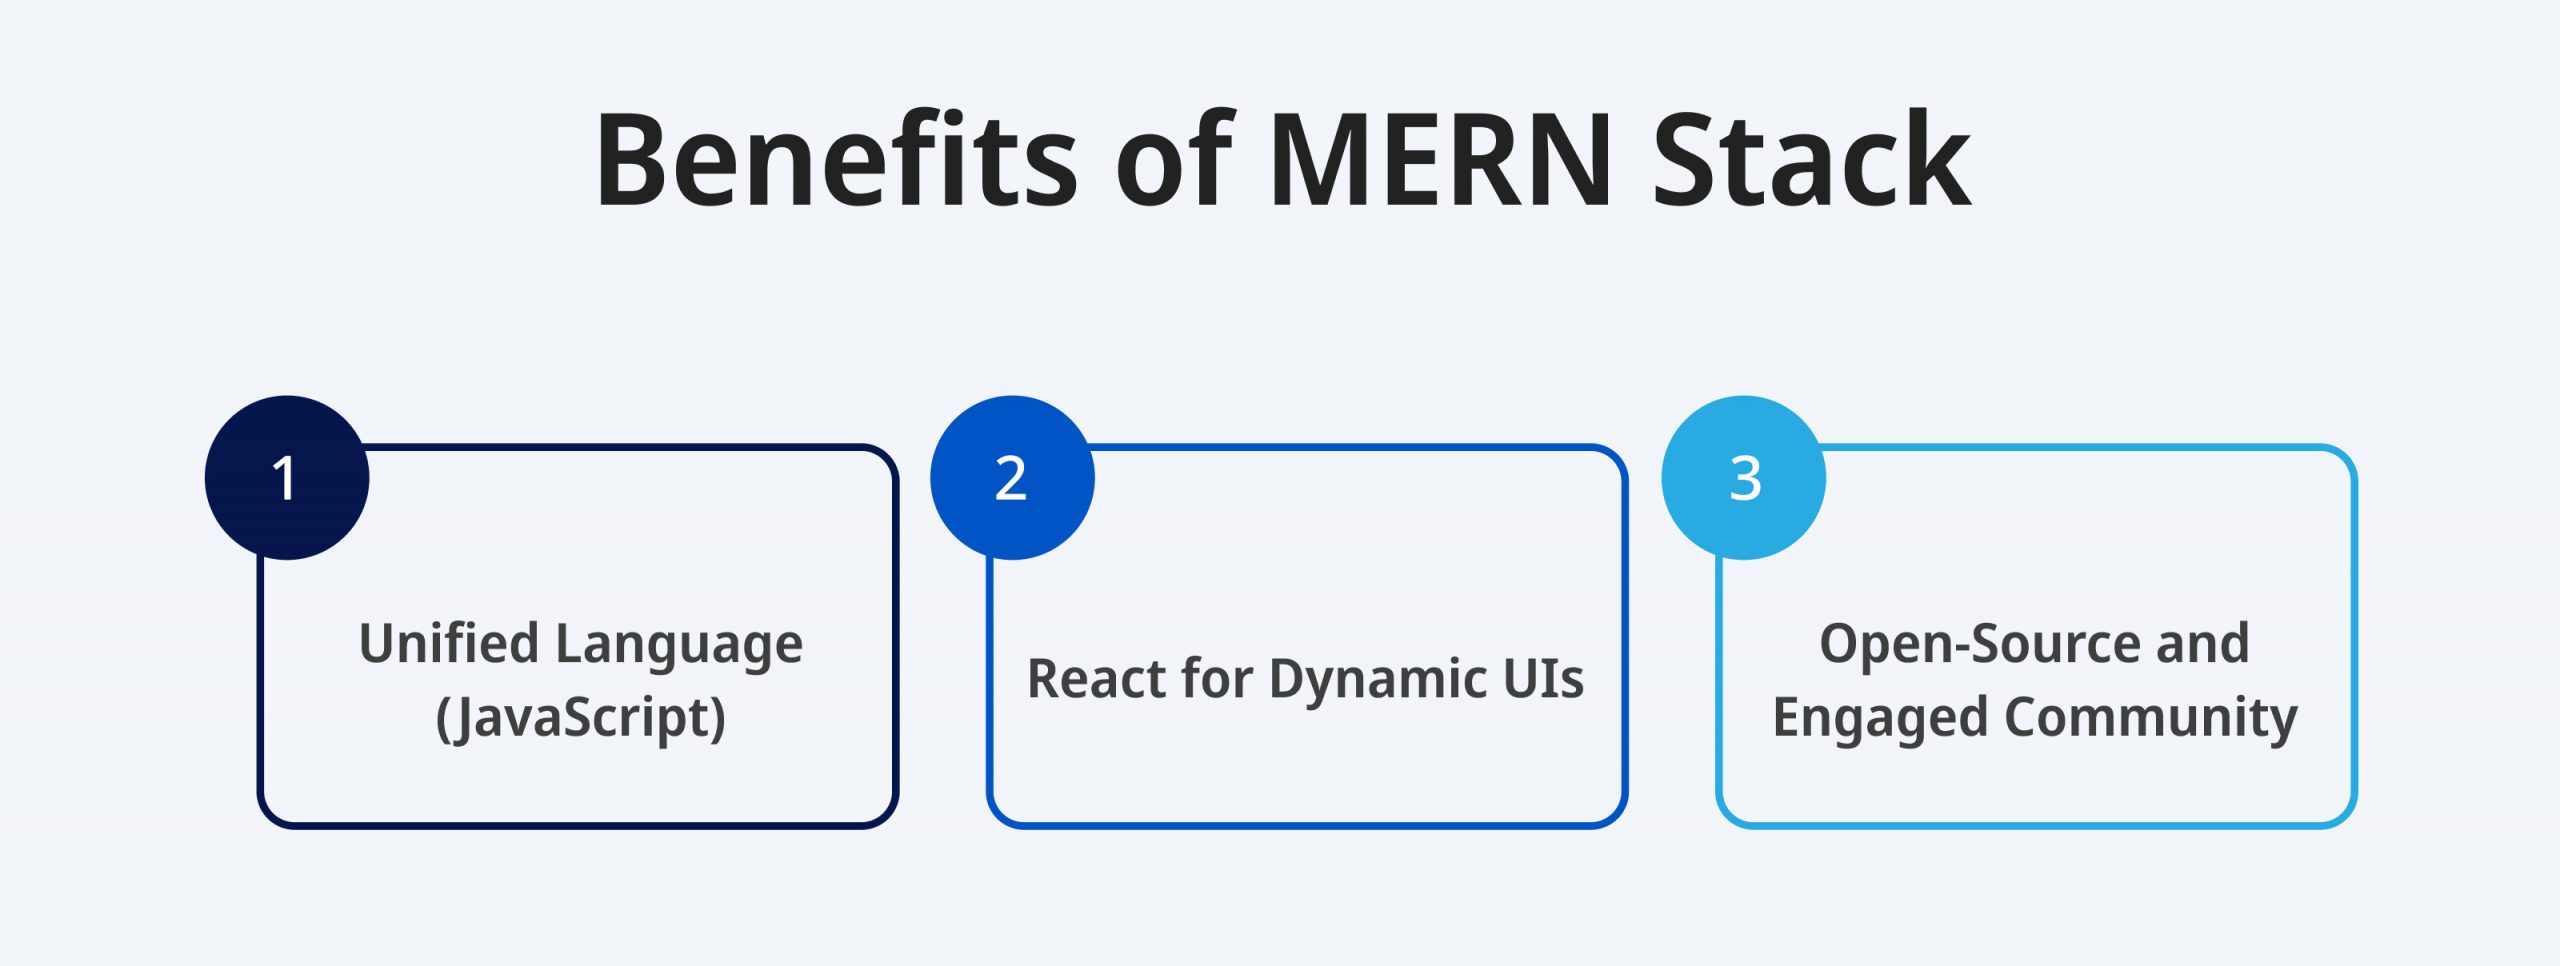 Benefits of MERN Stack